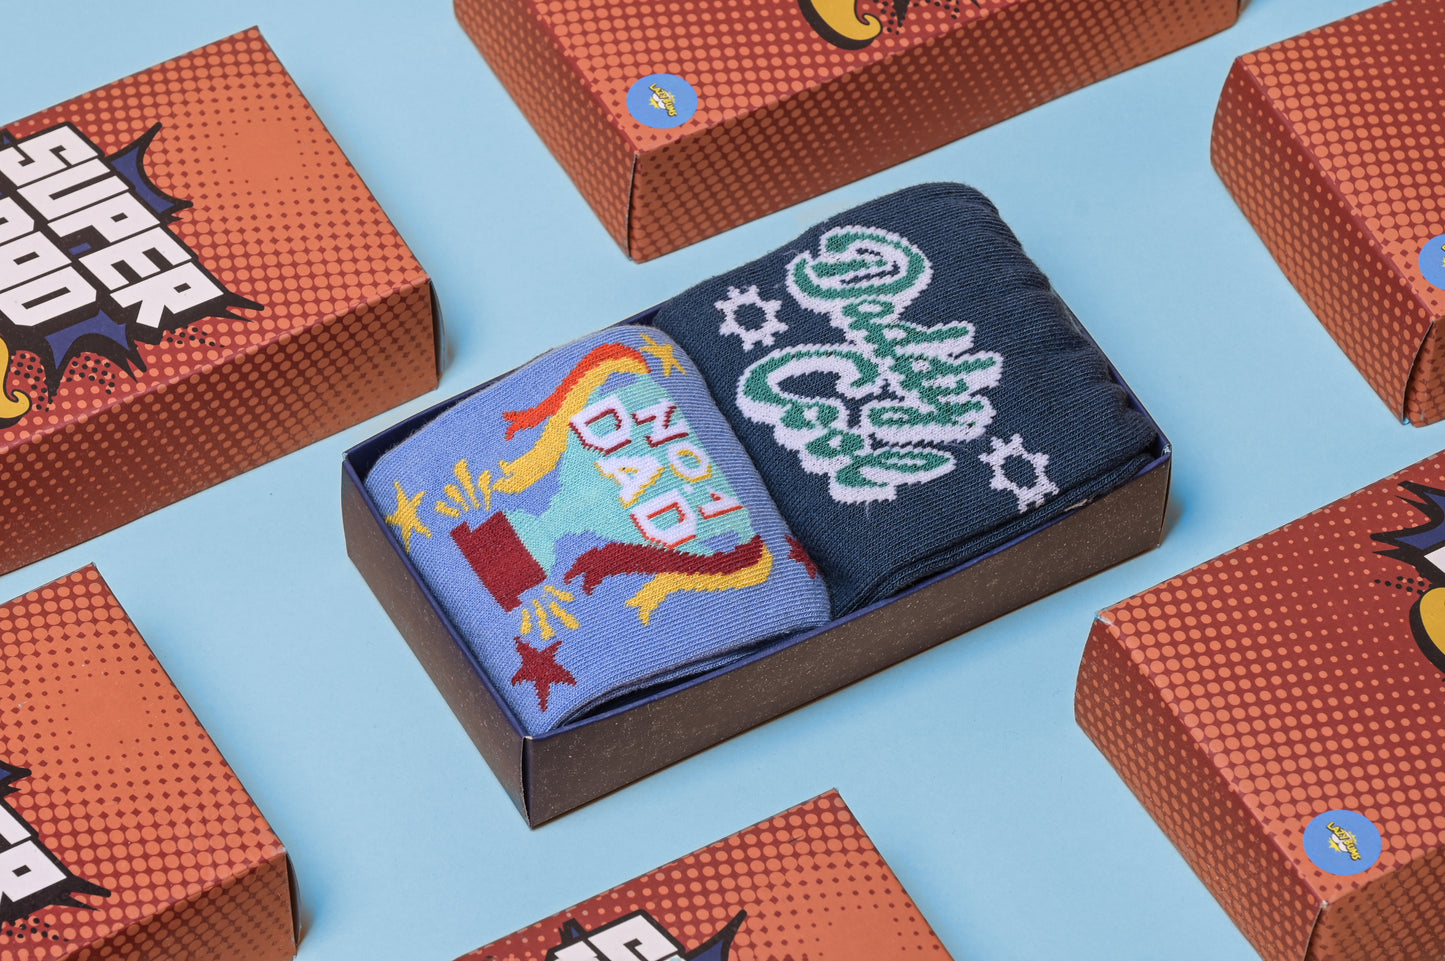 The Super Dad Socks Box-Gift Set